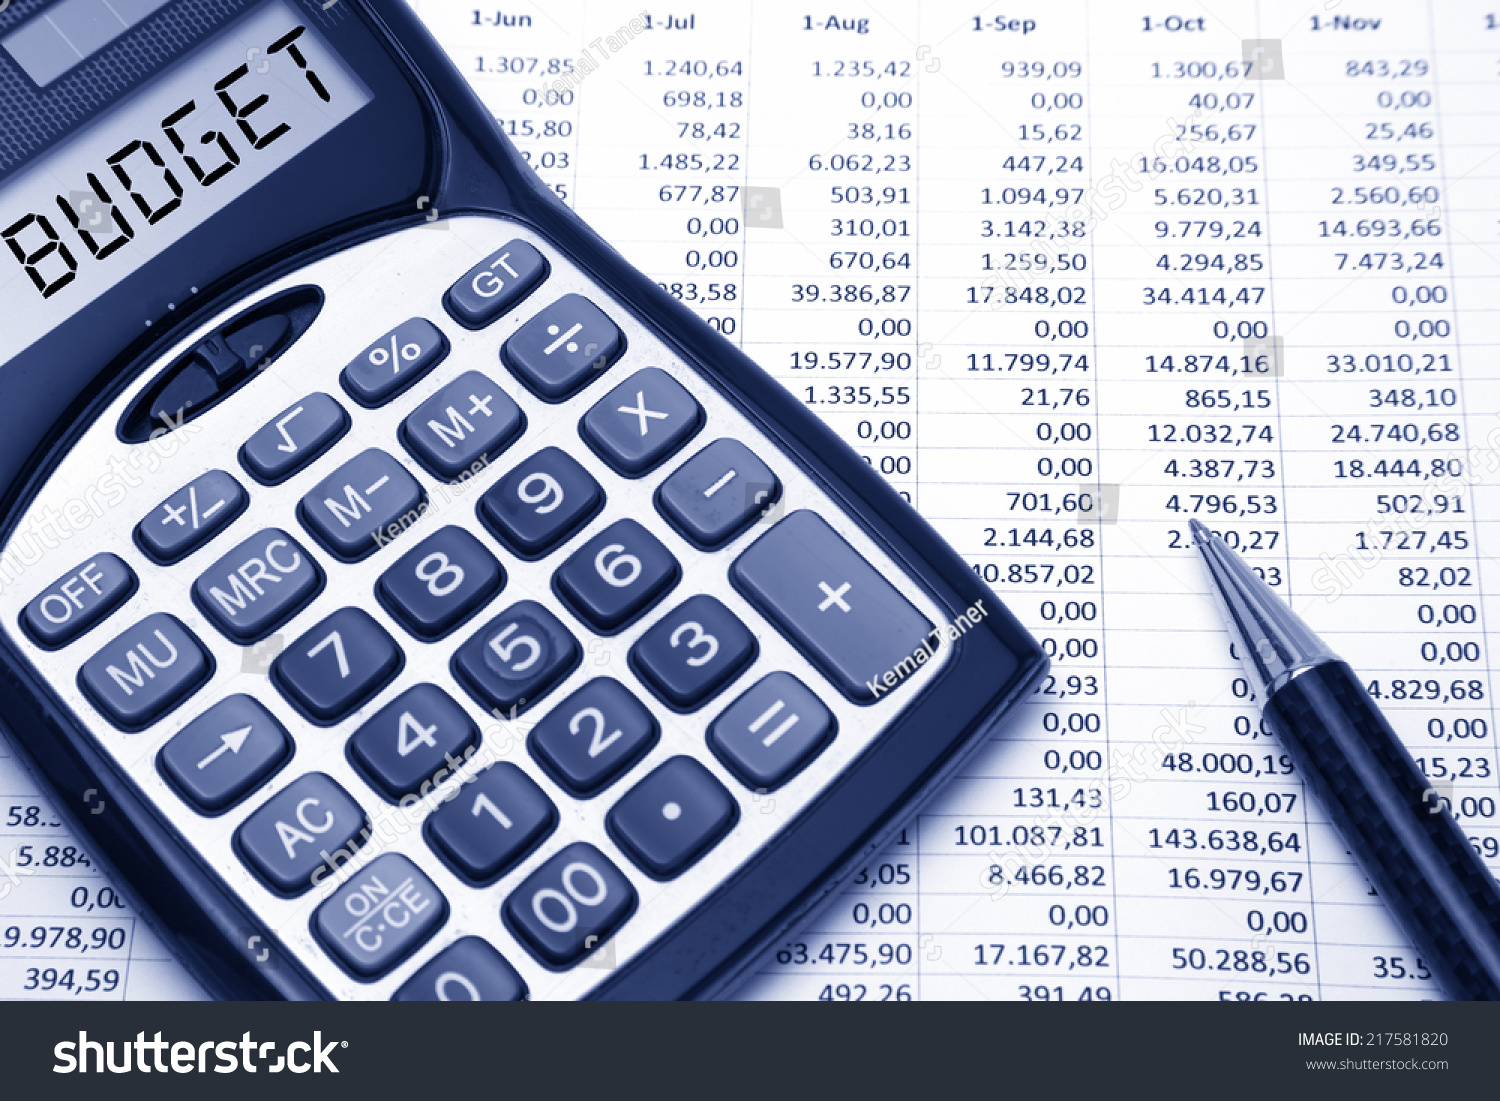 Budget Concept Budget text on calculator #217581820